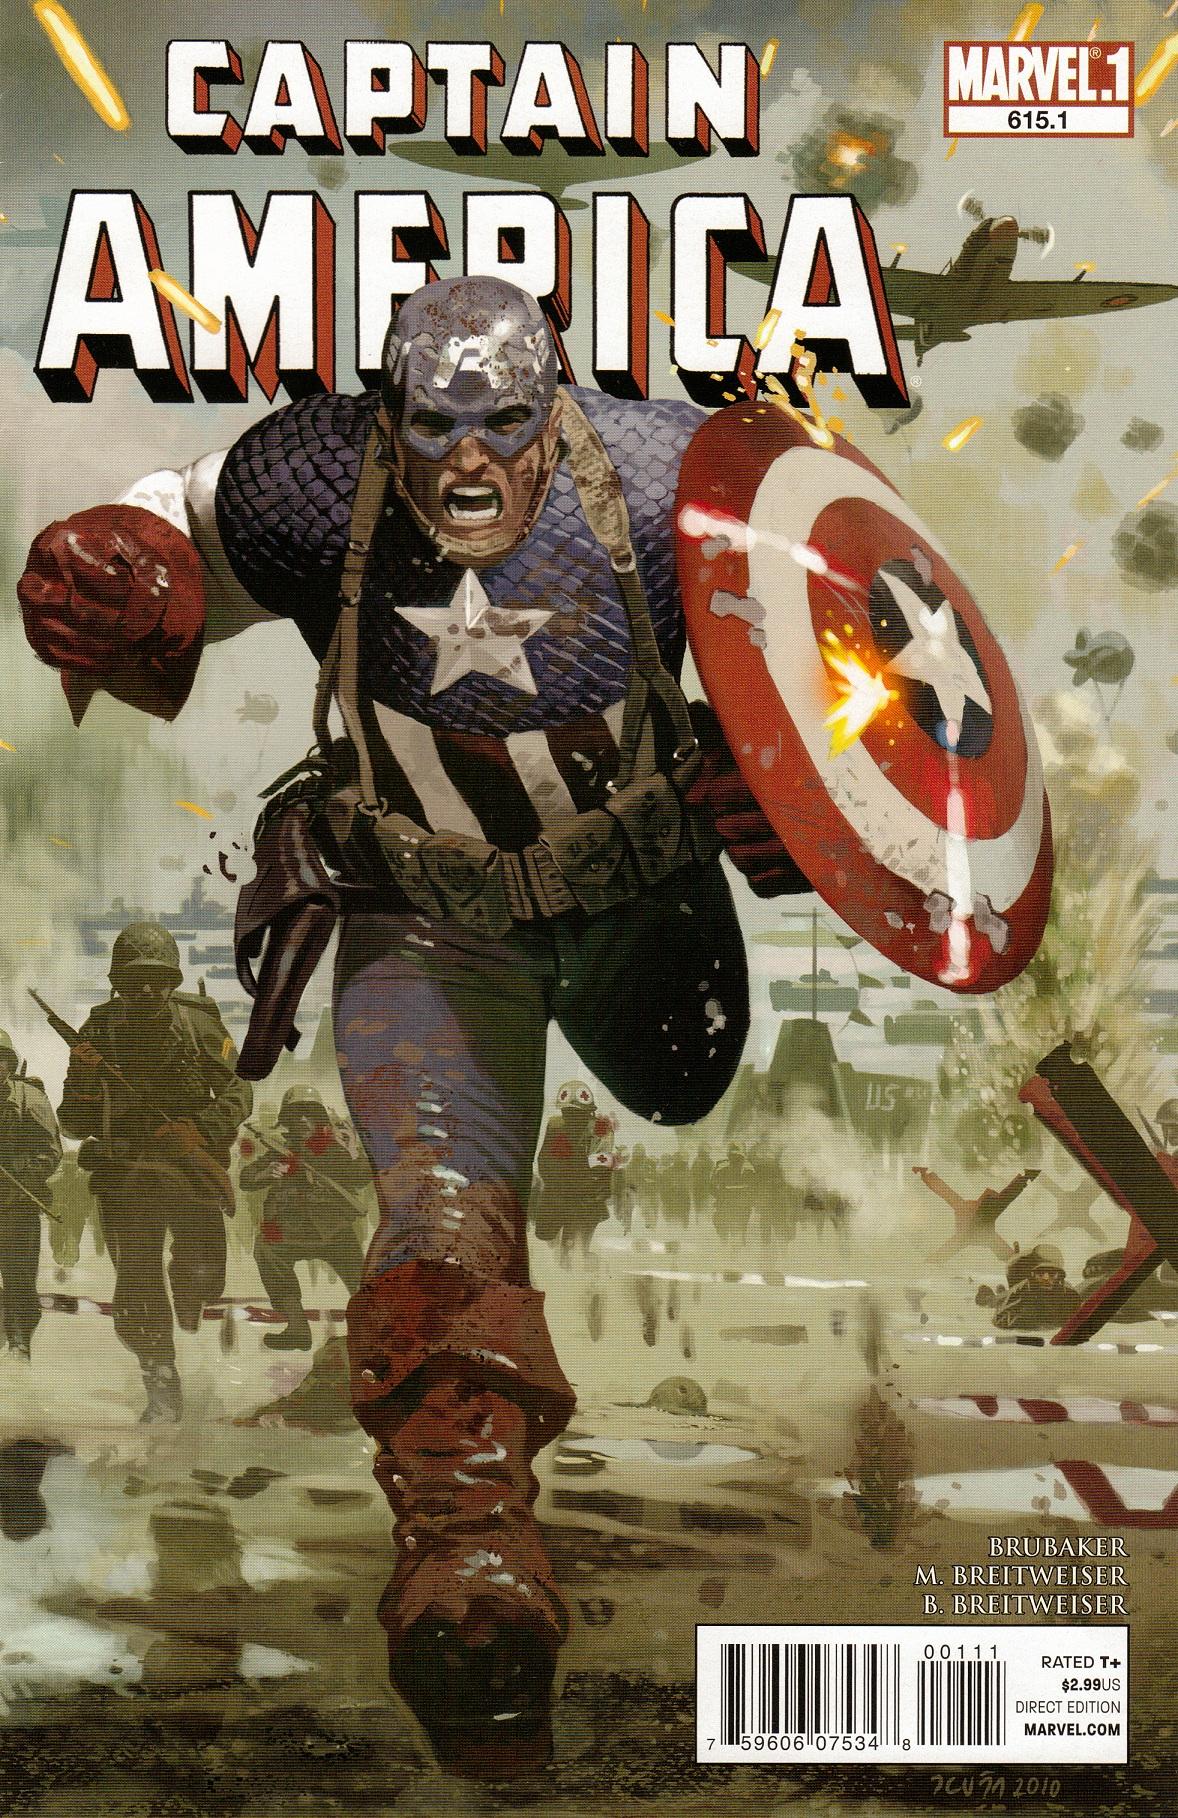 Captain America Vol. 1 #615.1